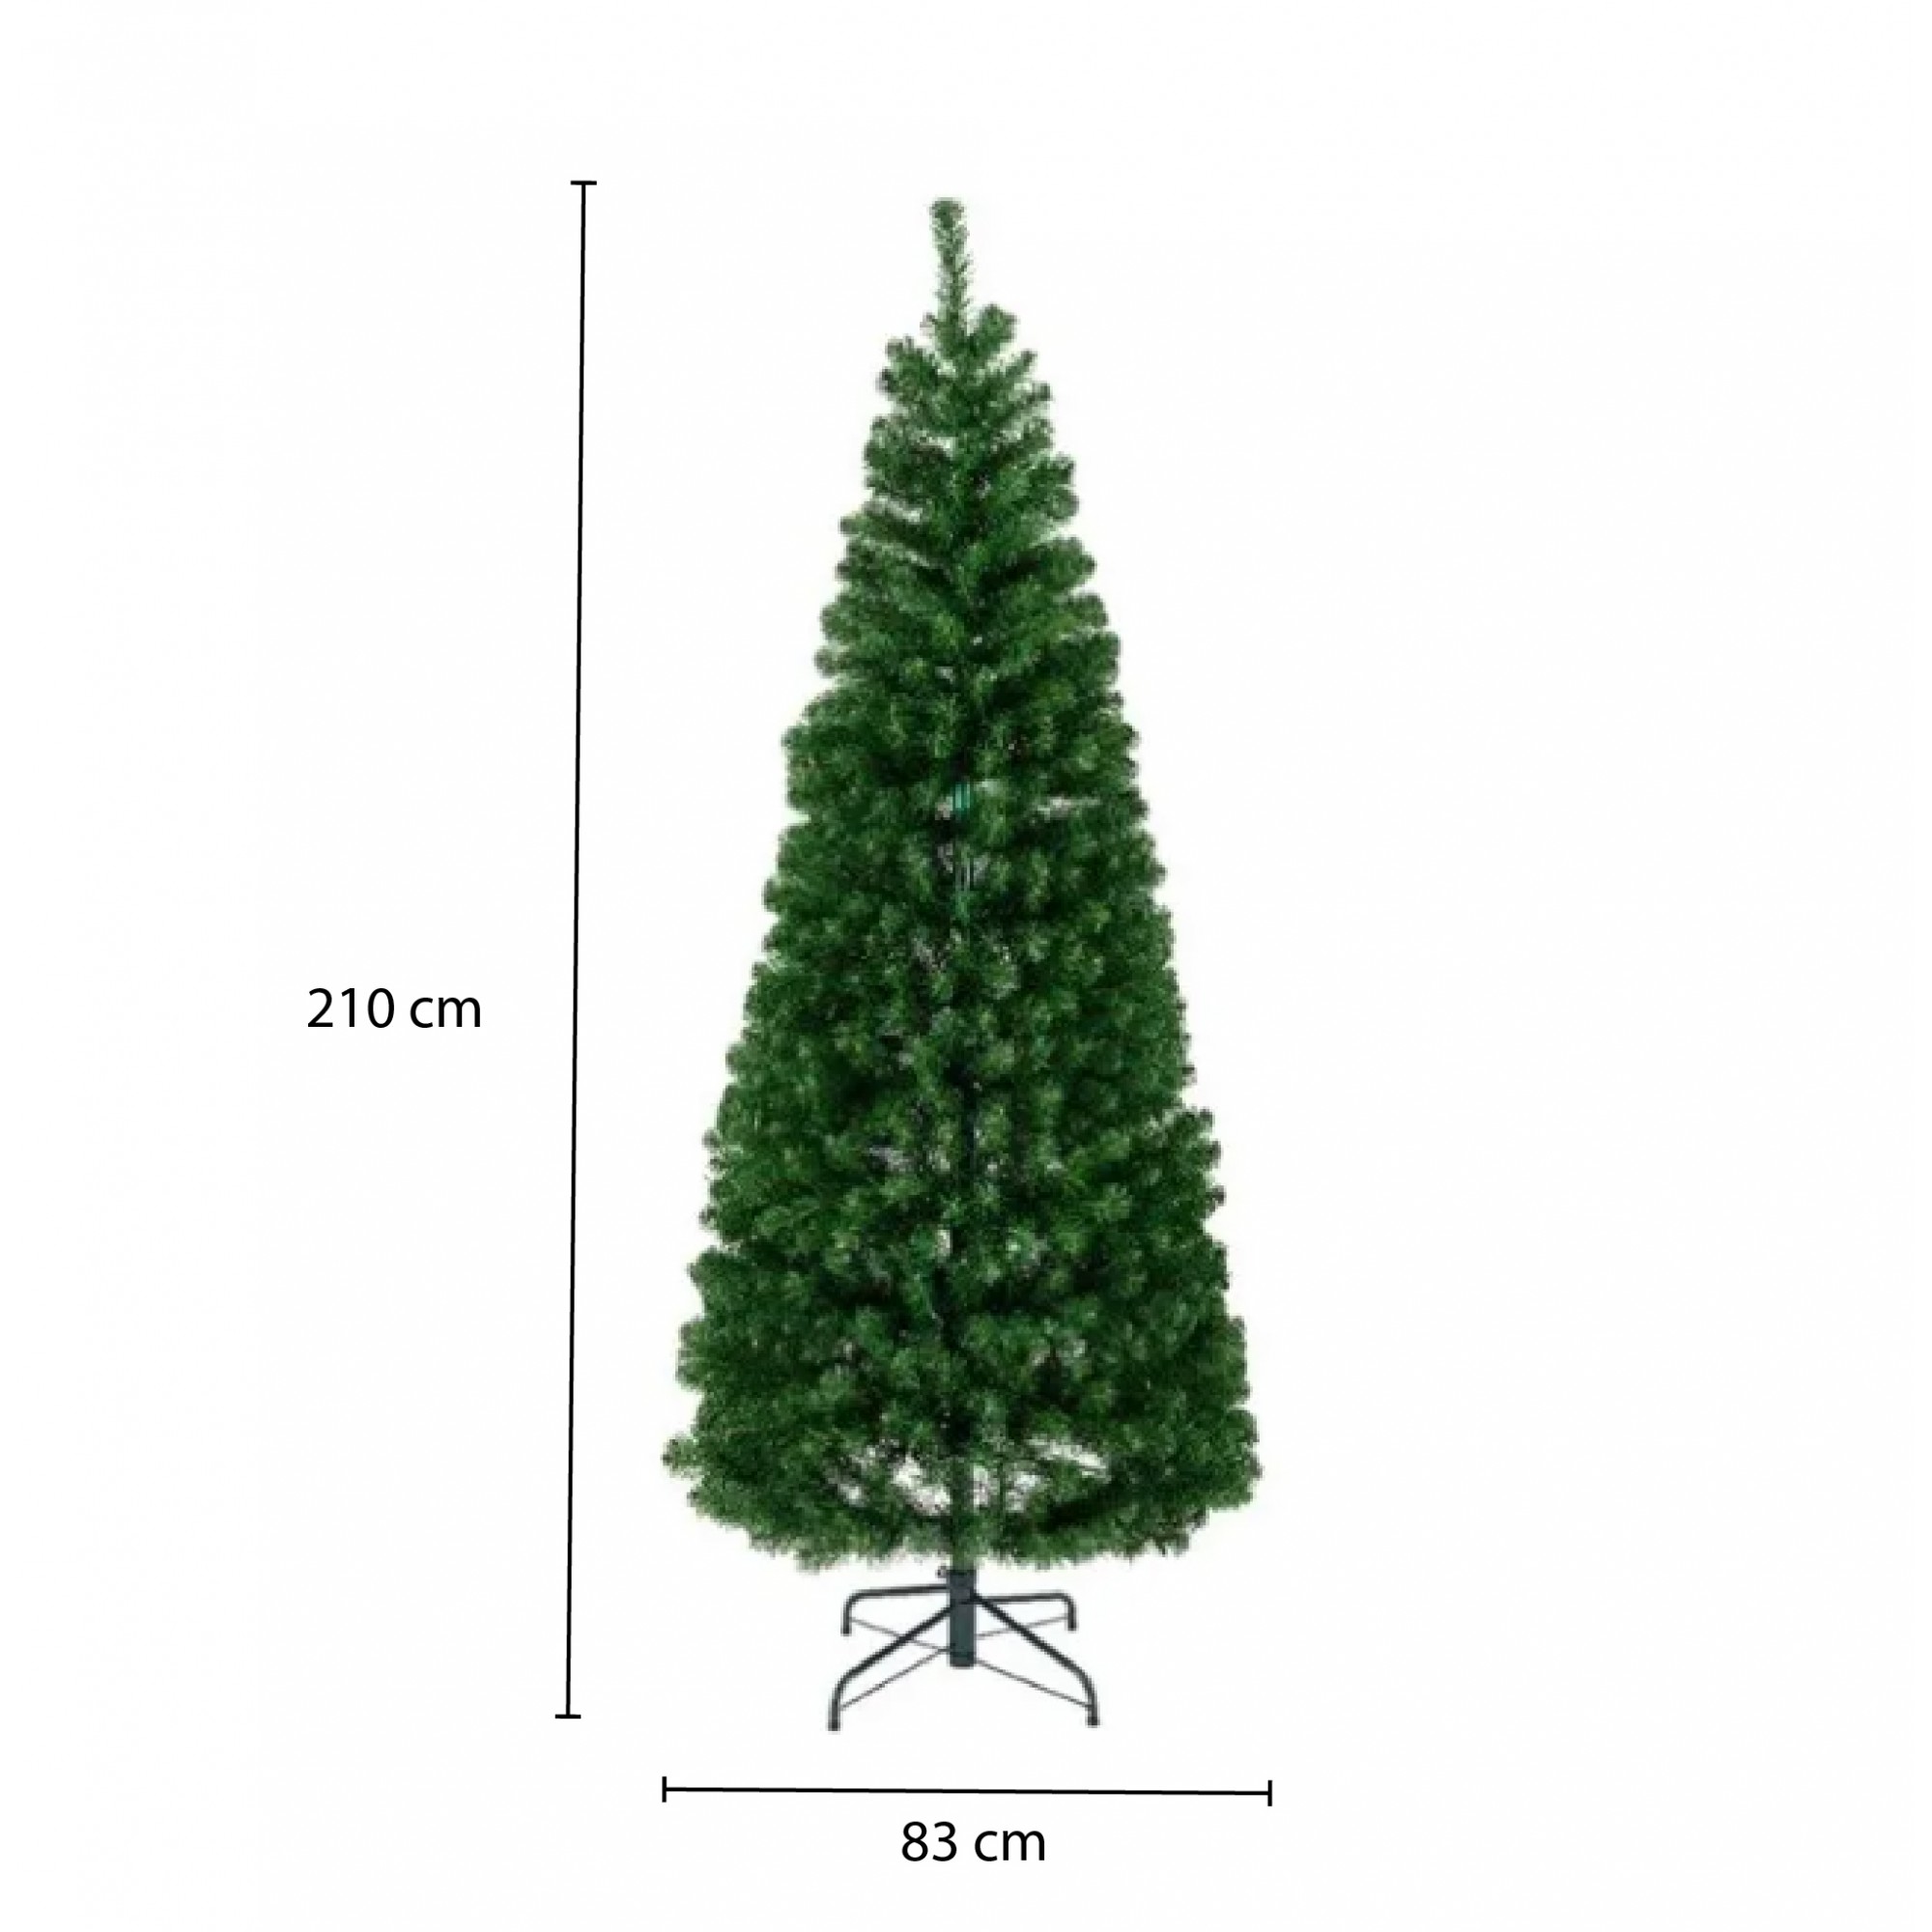 Everlands Albero di Natale Pop-up Verde 210 cm, Diametro 83 cm, Apertura a  Ombrello, 12 Anni Di Garanzia